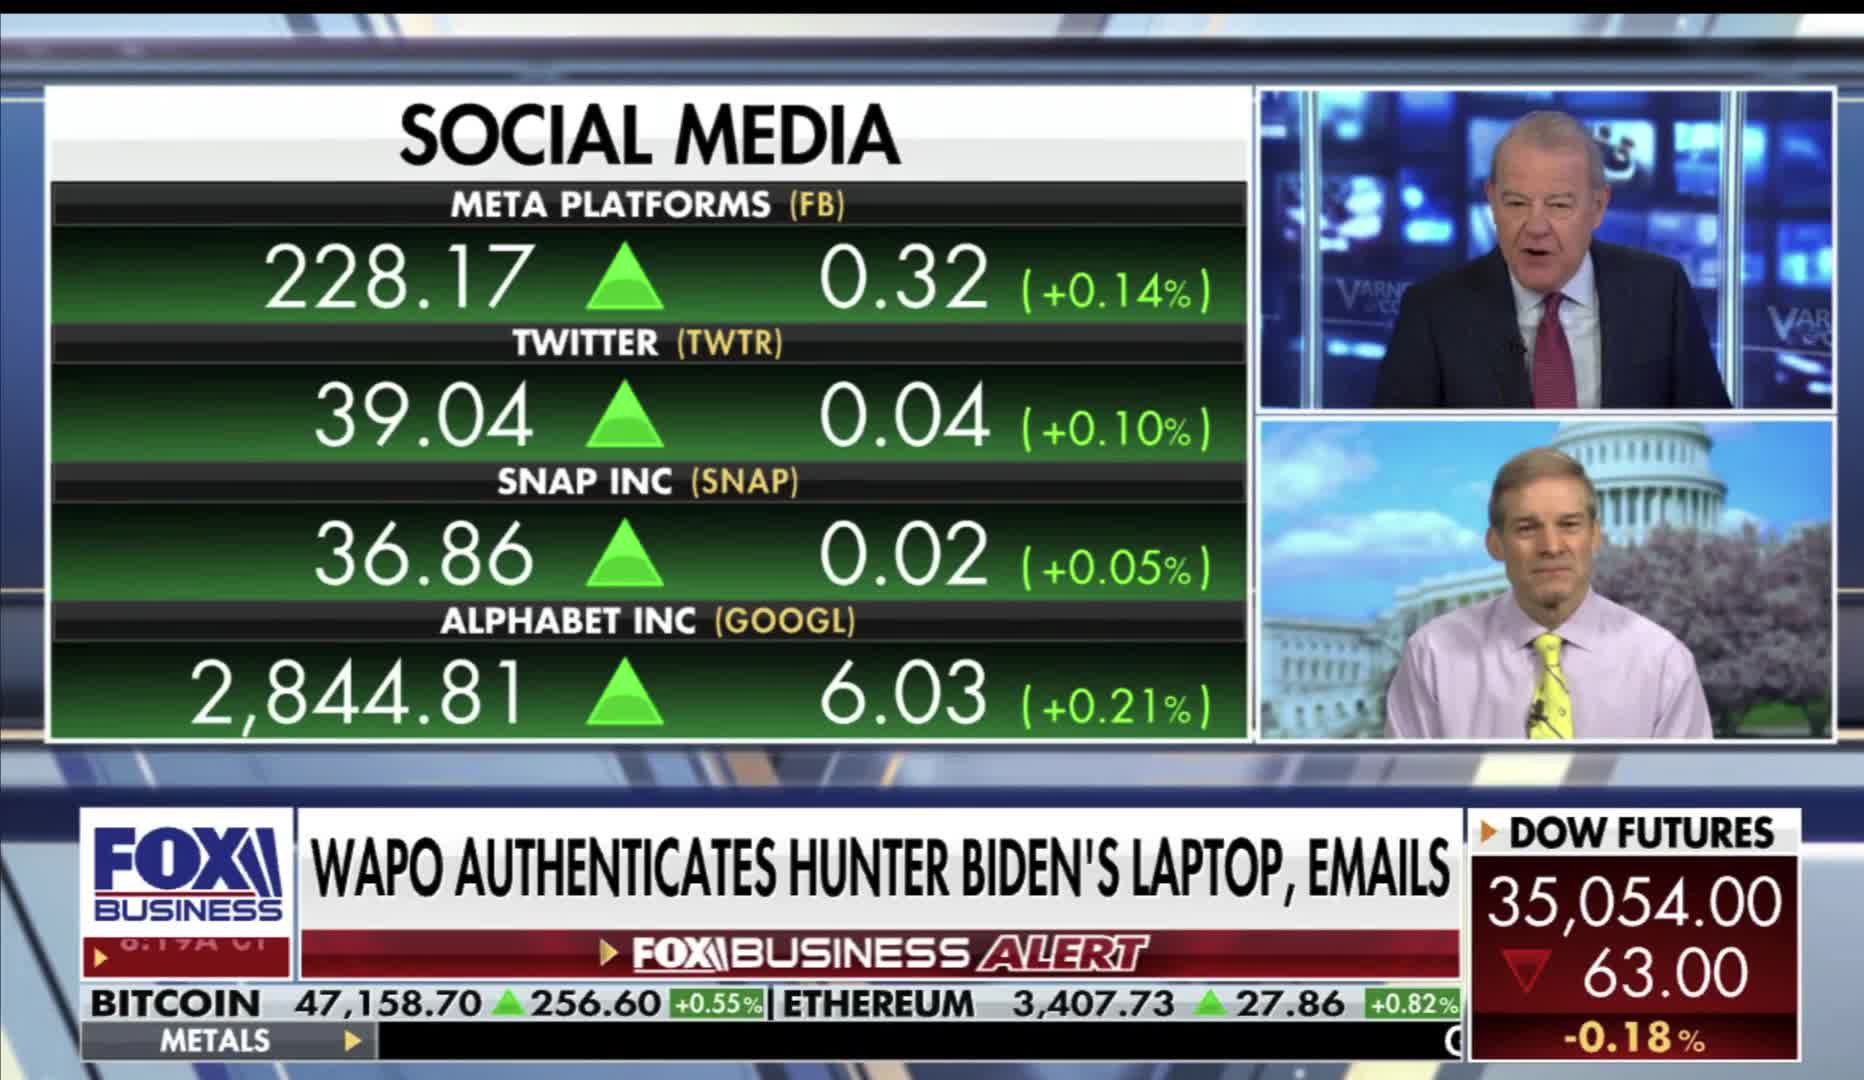 Jim Jordan launches investigation into Twitter and Facebook on Hunter Biden's laptop